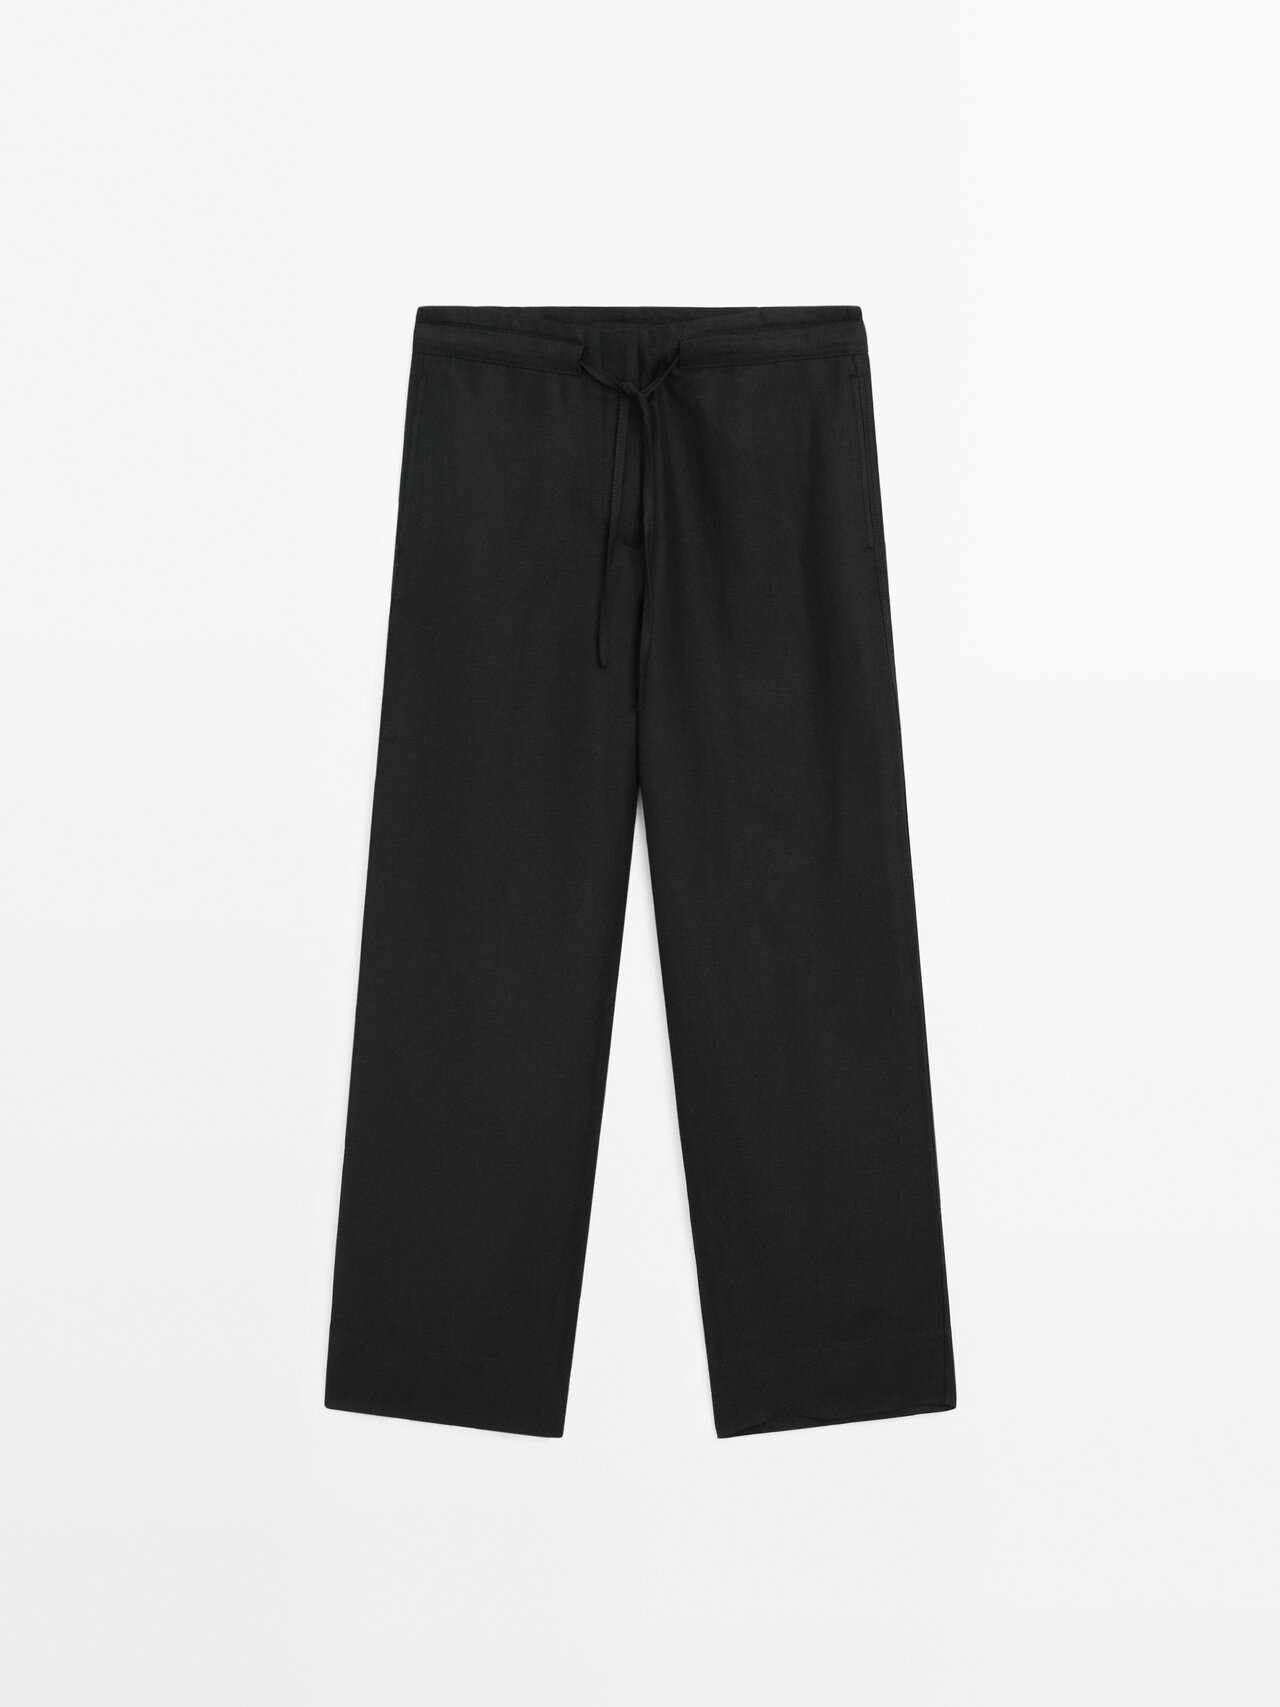 Massimo Dutti Black Drawstring Co Ord Trousers